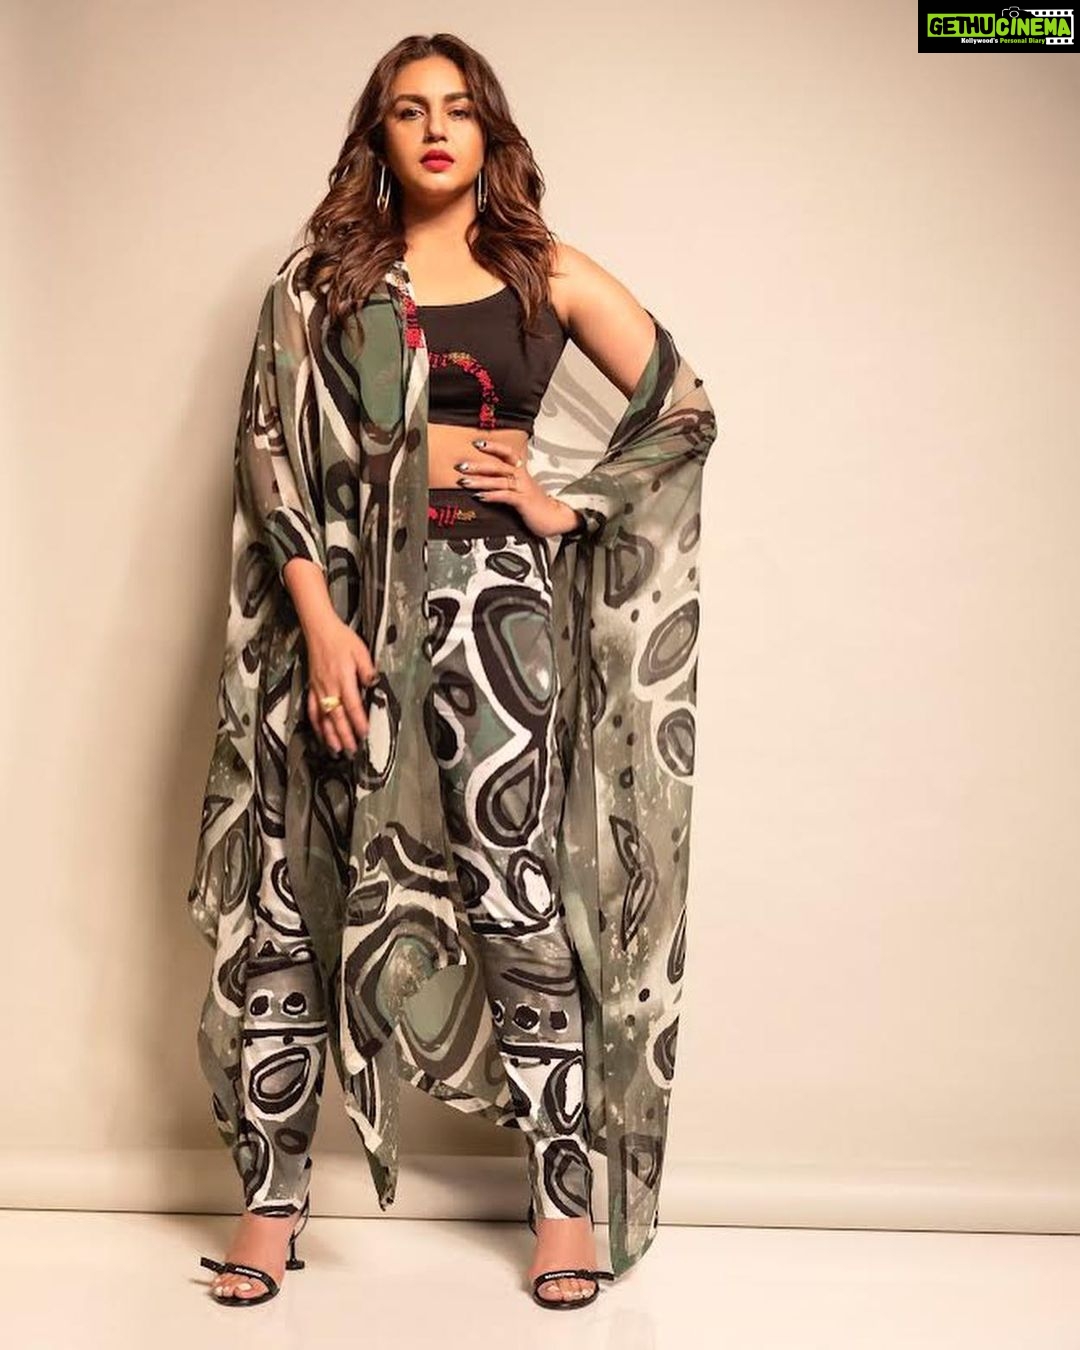 Huma Qureshi Xxx Video - Actress Huma Qureshi HD Photos and Wallpapers November 2022 - Gethu Cinema